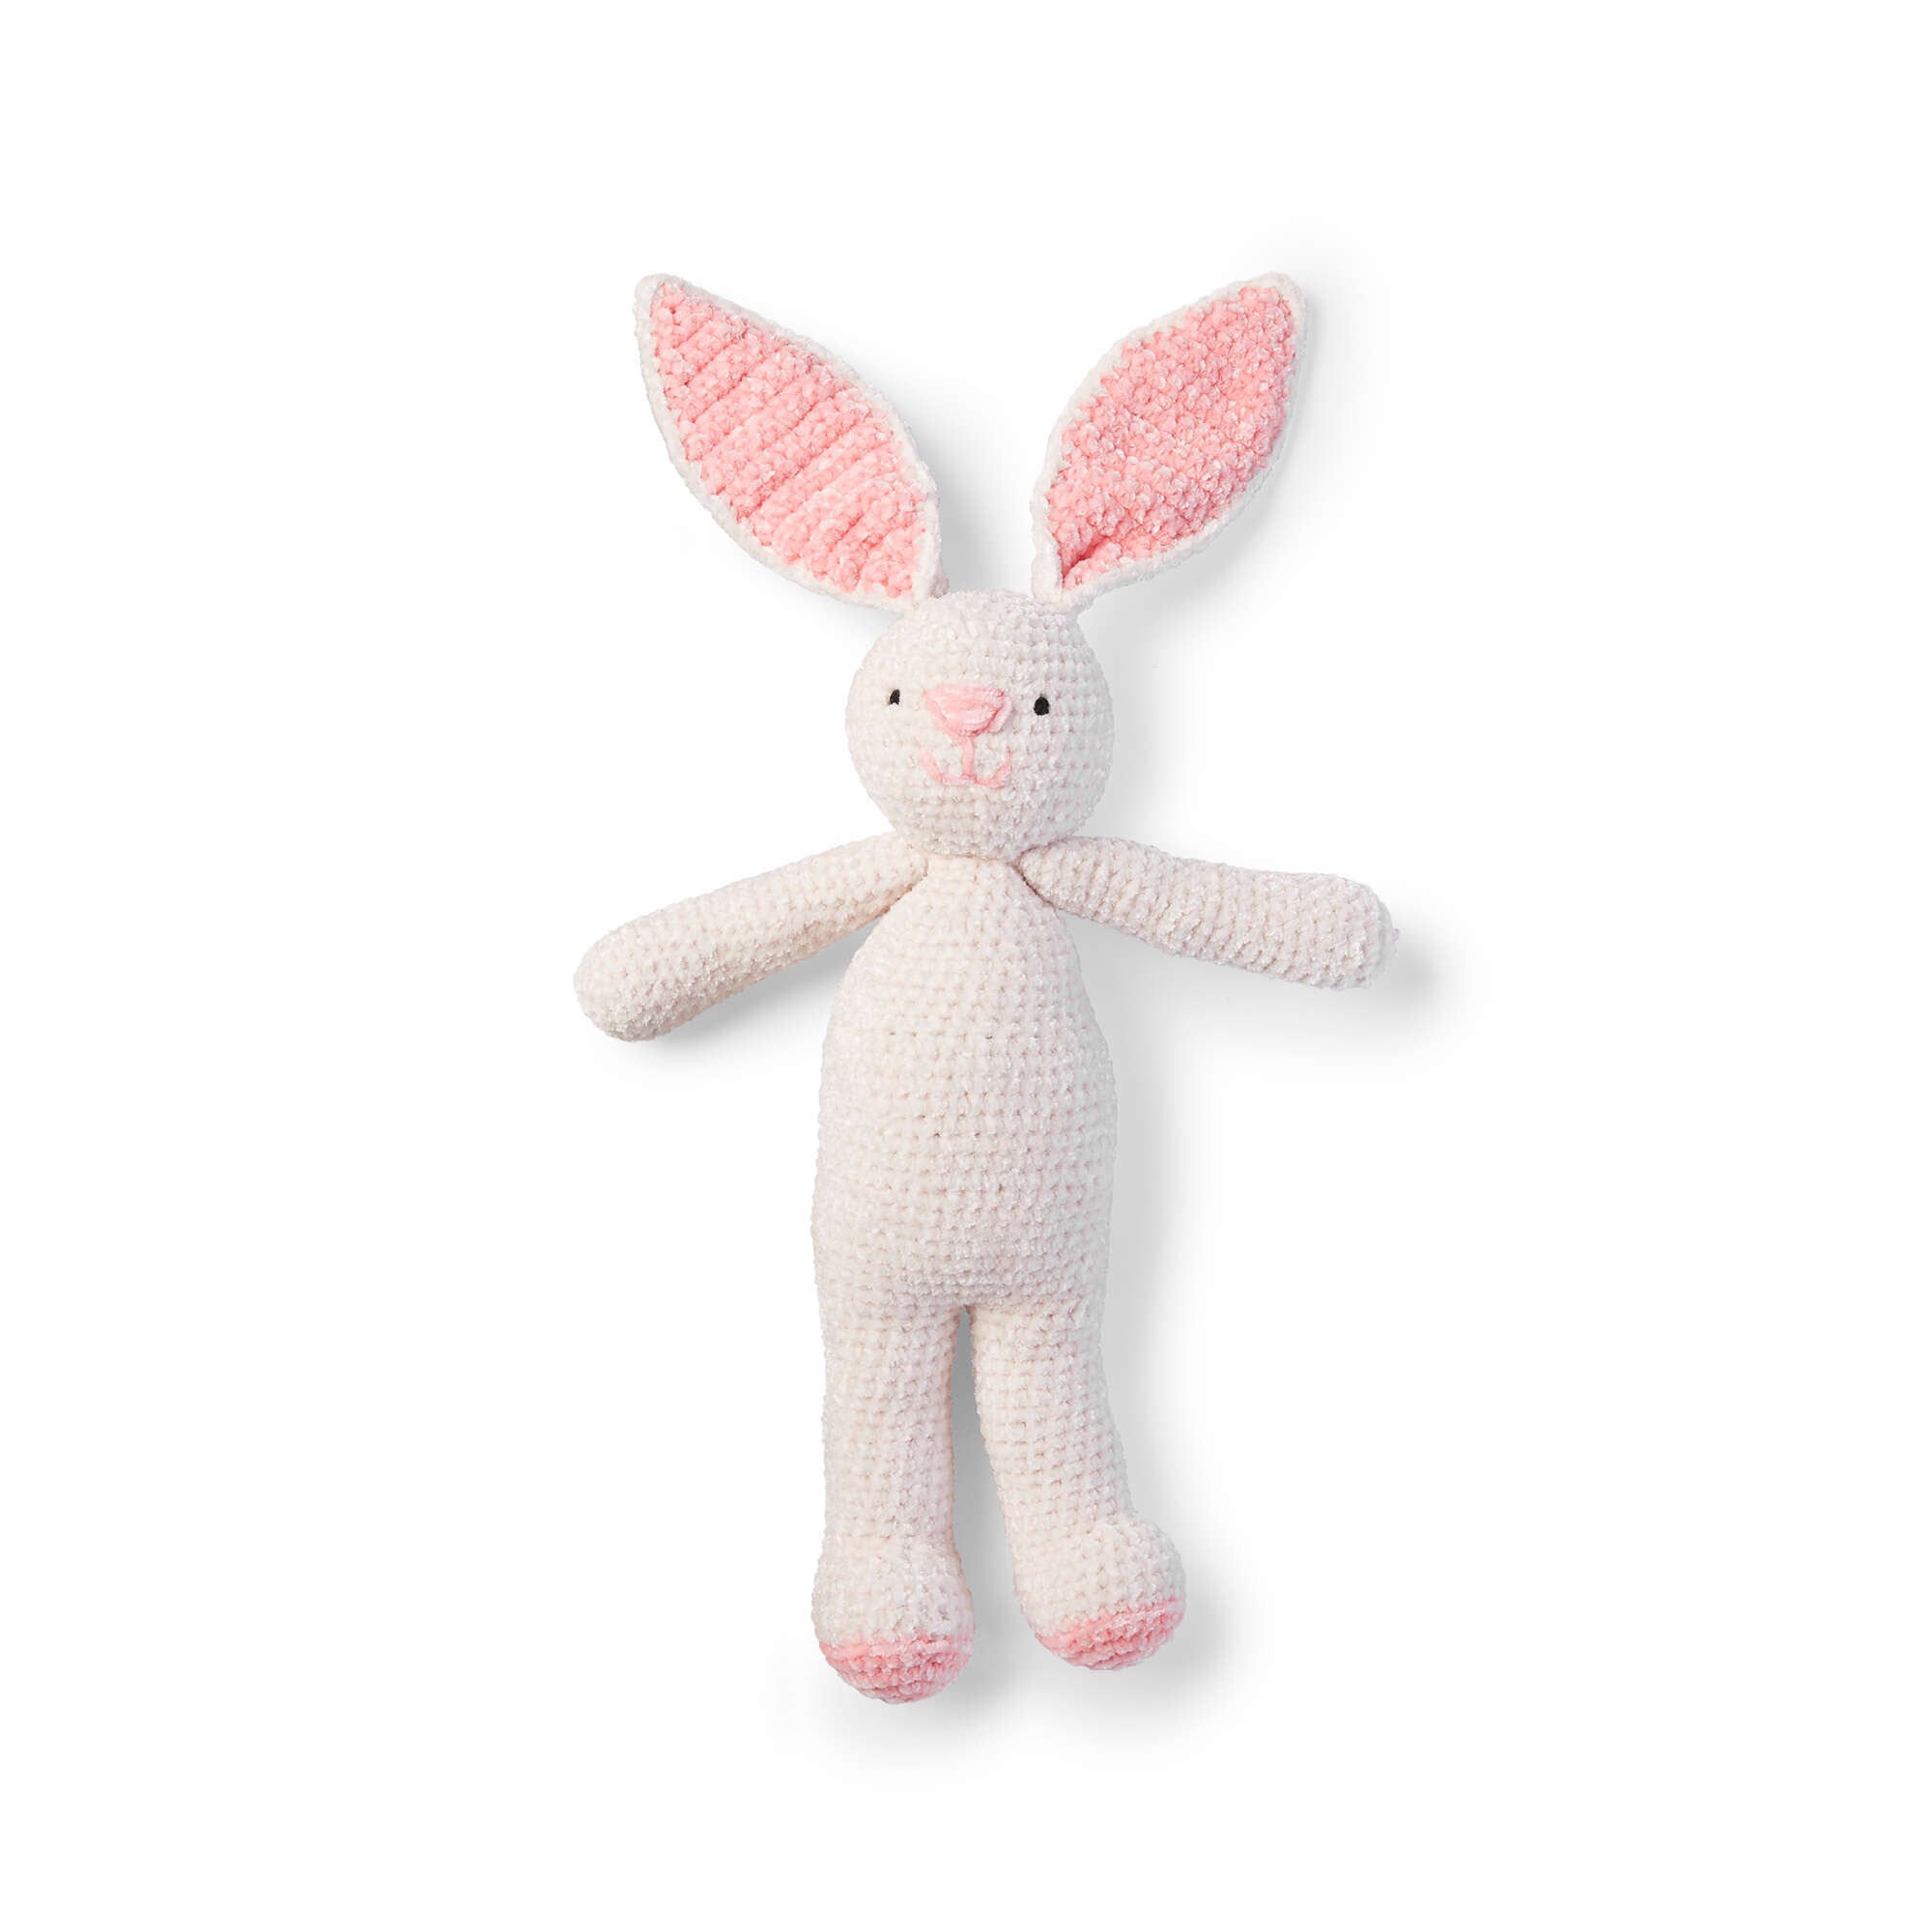 Magic Ring Bunny Blanket Crochet Kit - A/W - Easy - (8034-306)